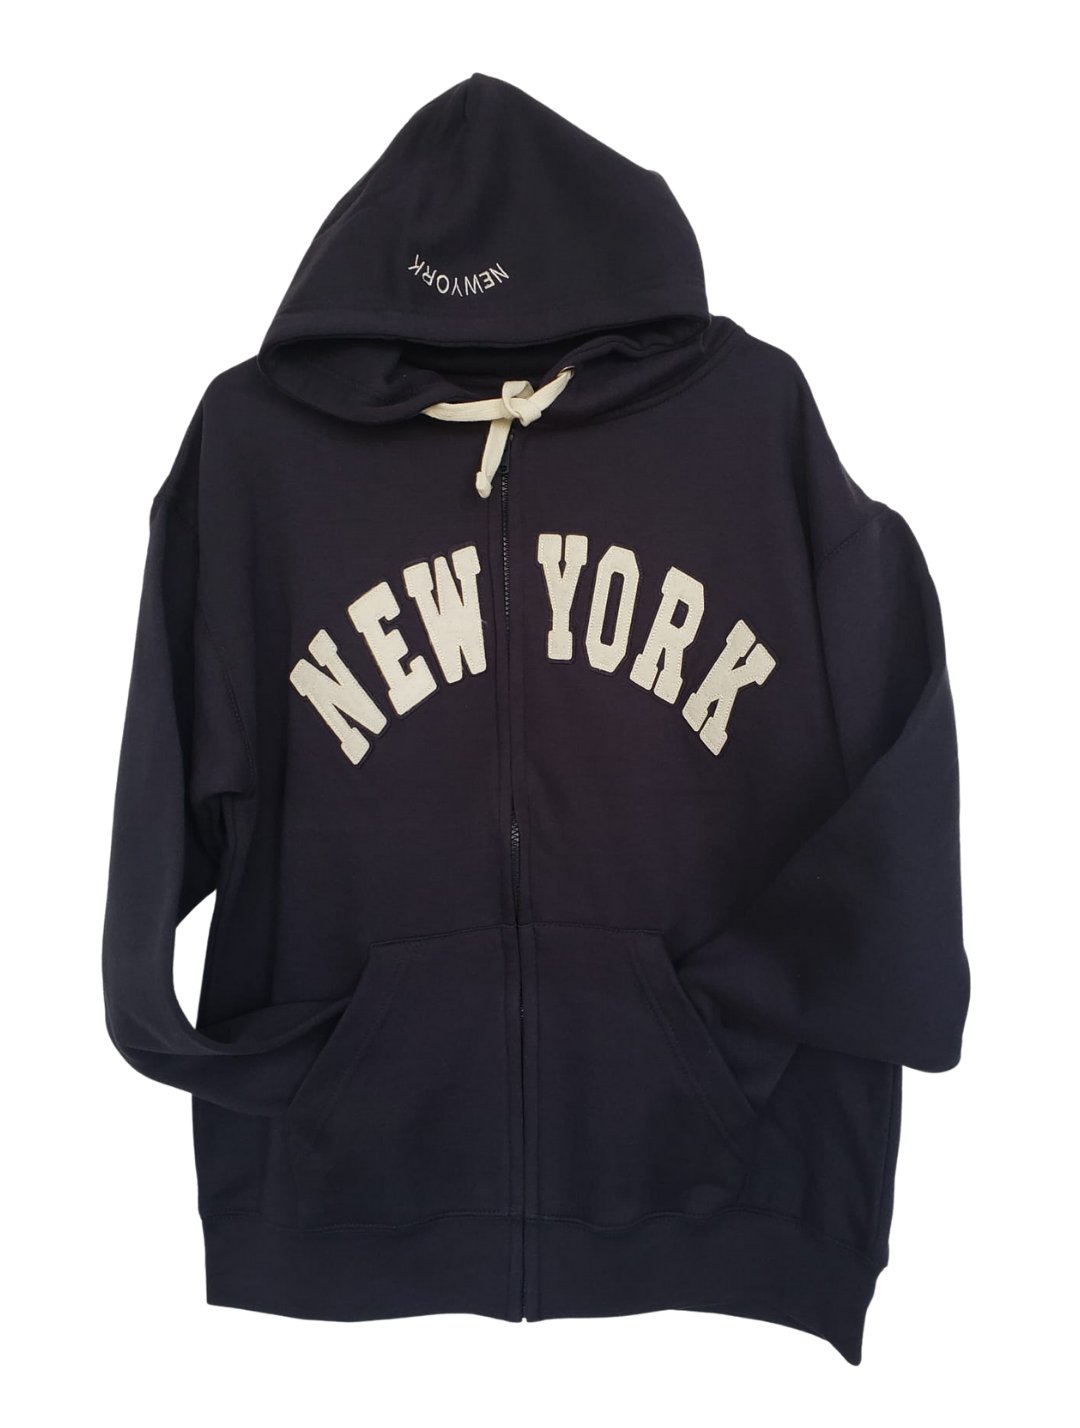 Men's New York City Zippered Hoodie Sweatshirt Black Navy Pink Retro Style Black / X-Small